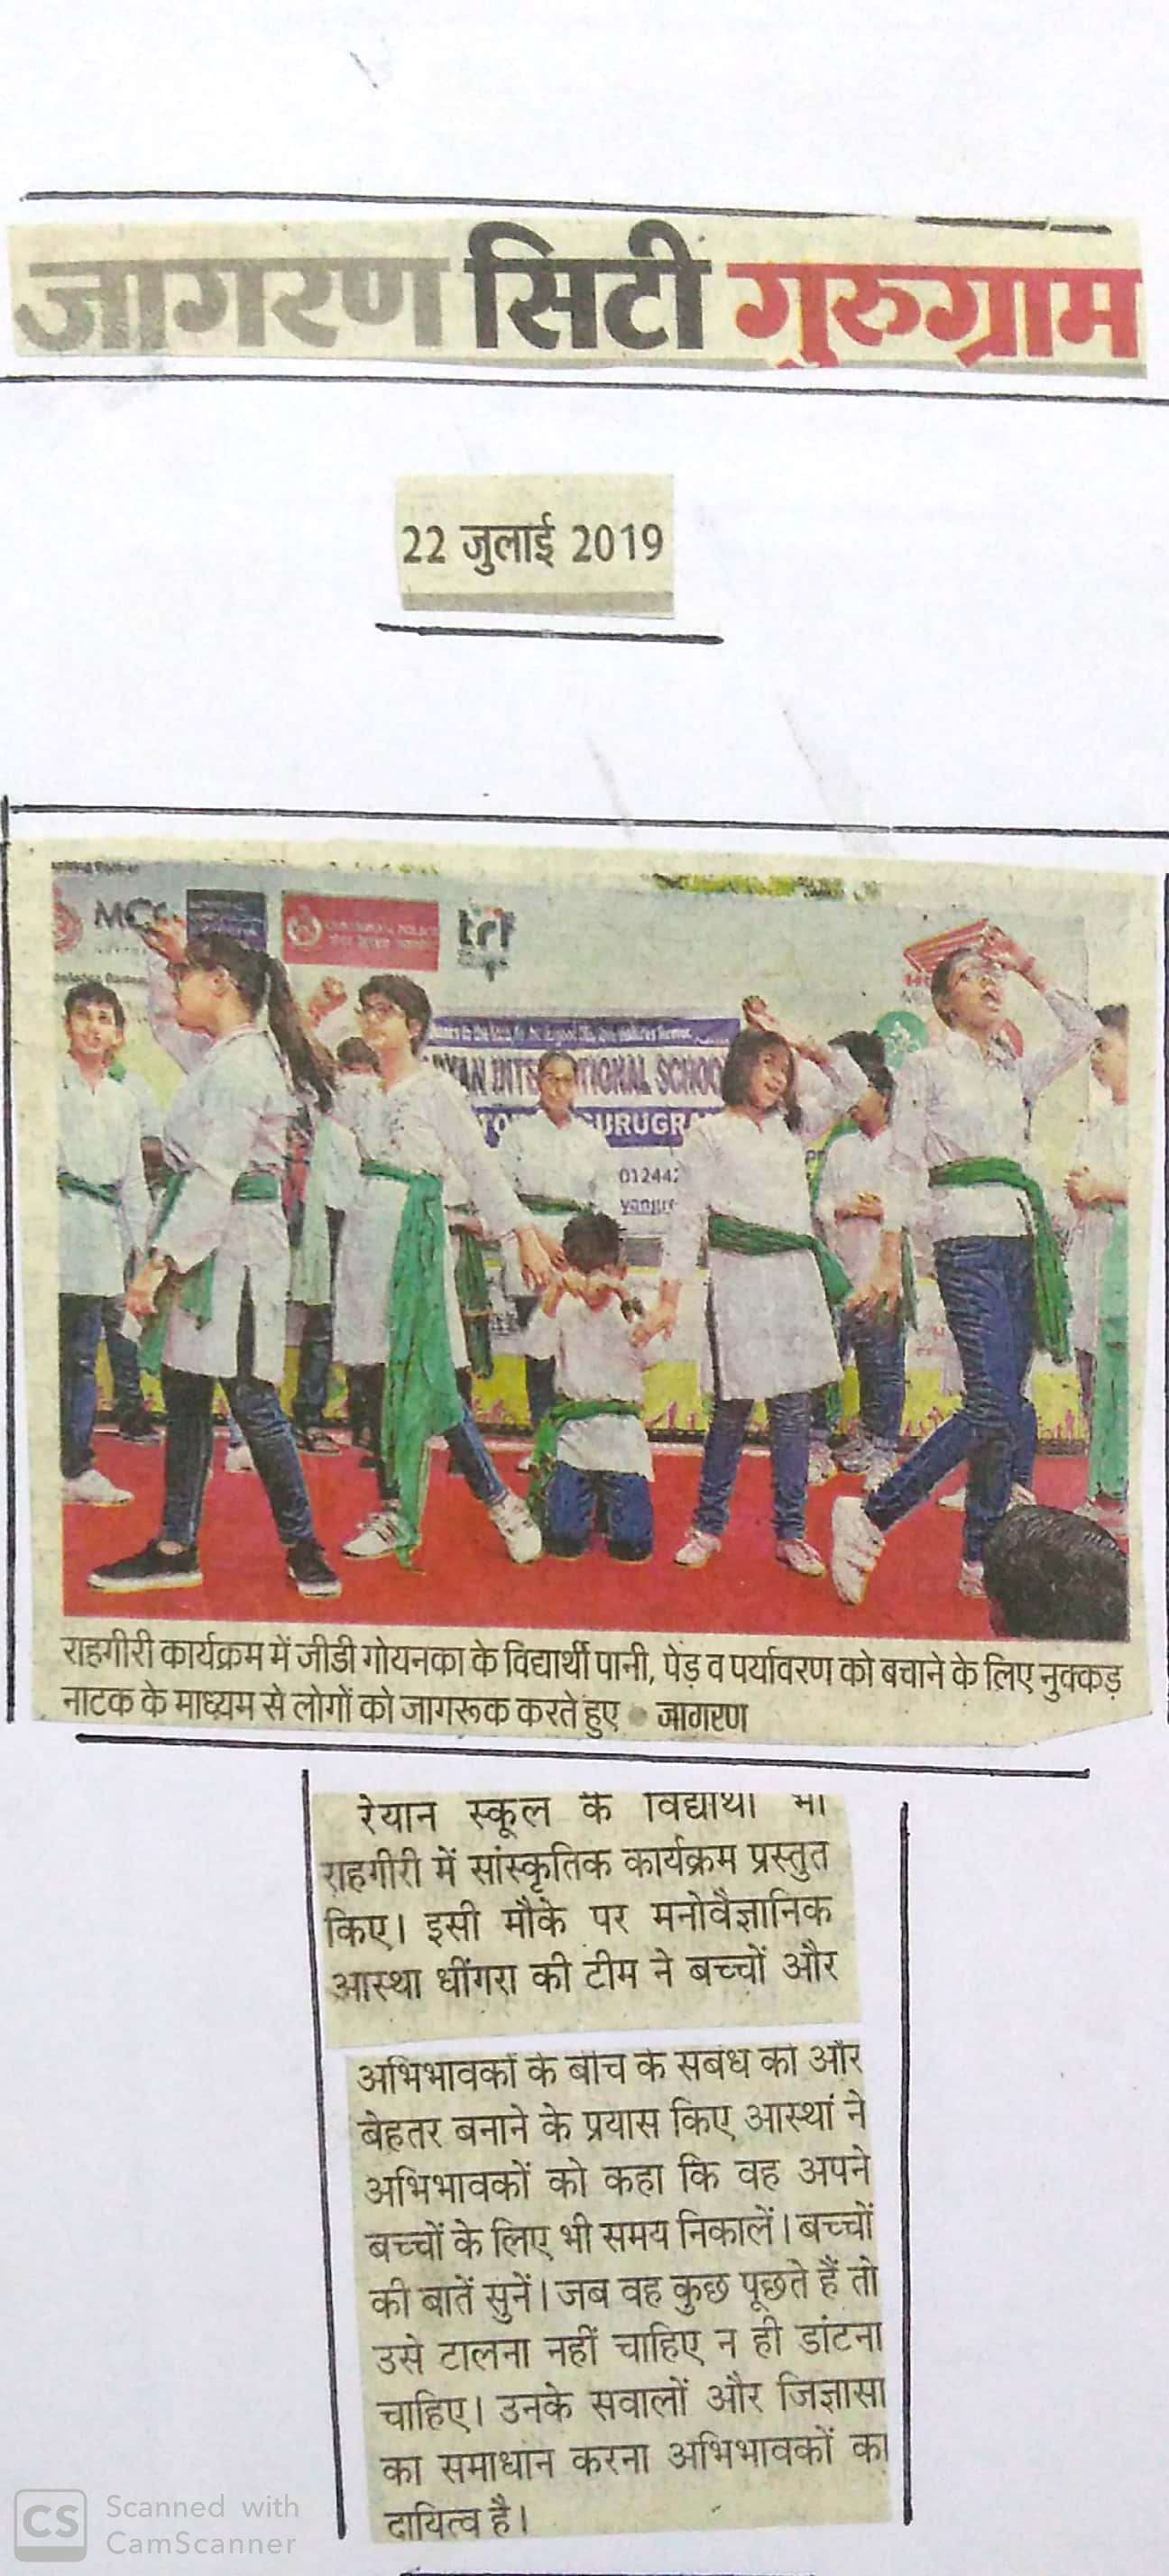 Students presented cultural acts in Raahgiri - Ryan International School, Sec 31 Gurgaon - Ryan Group